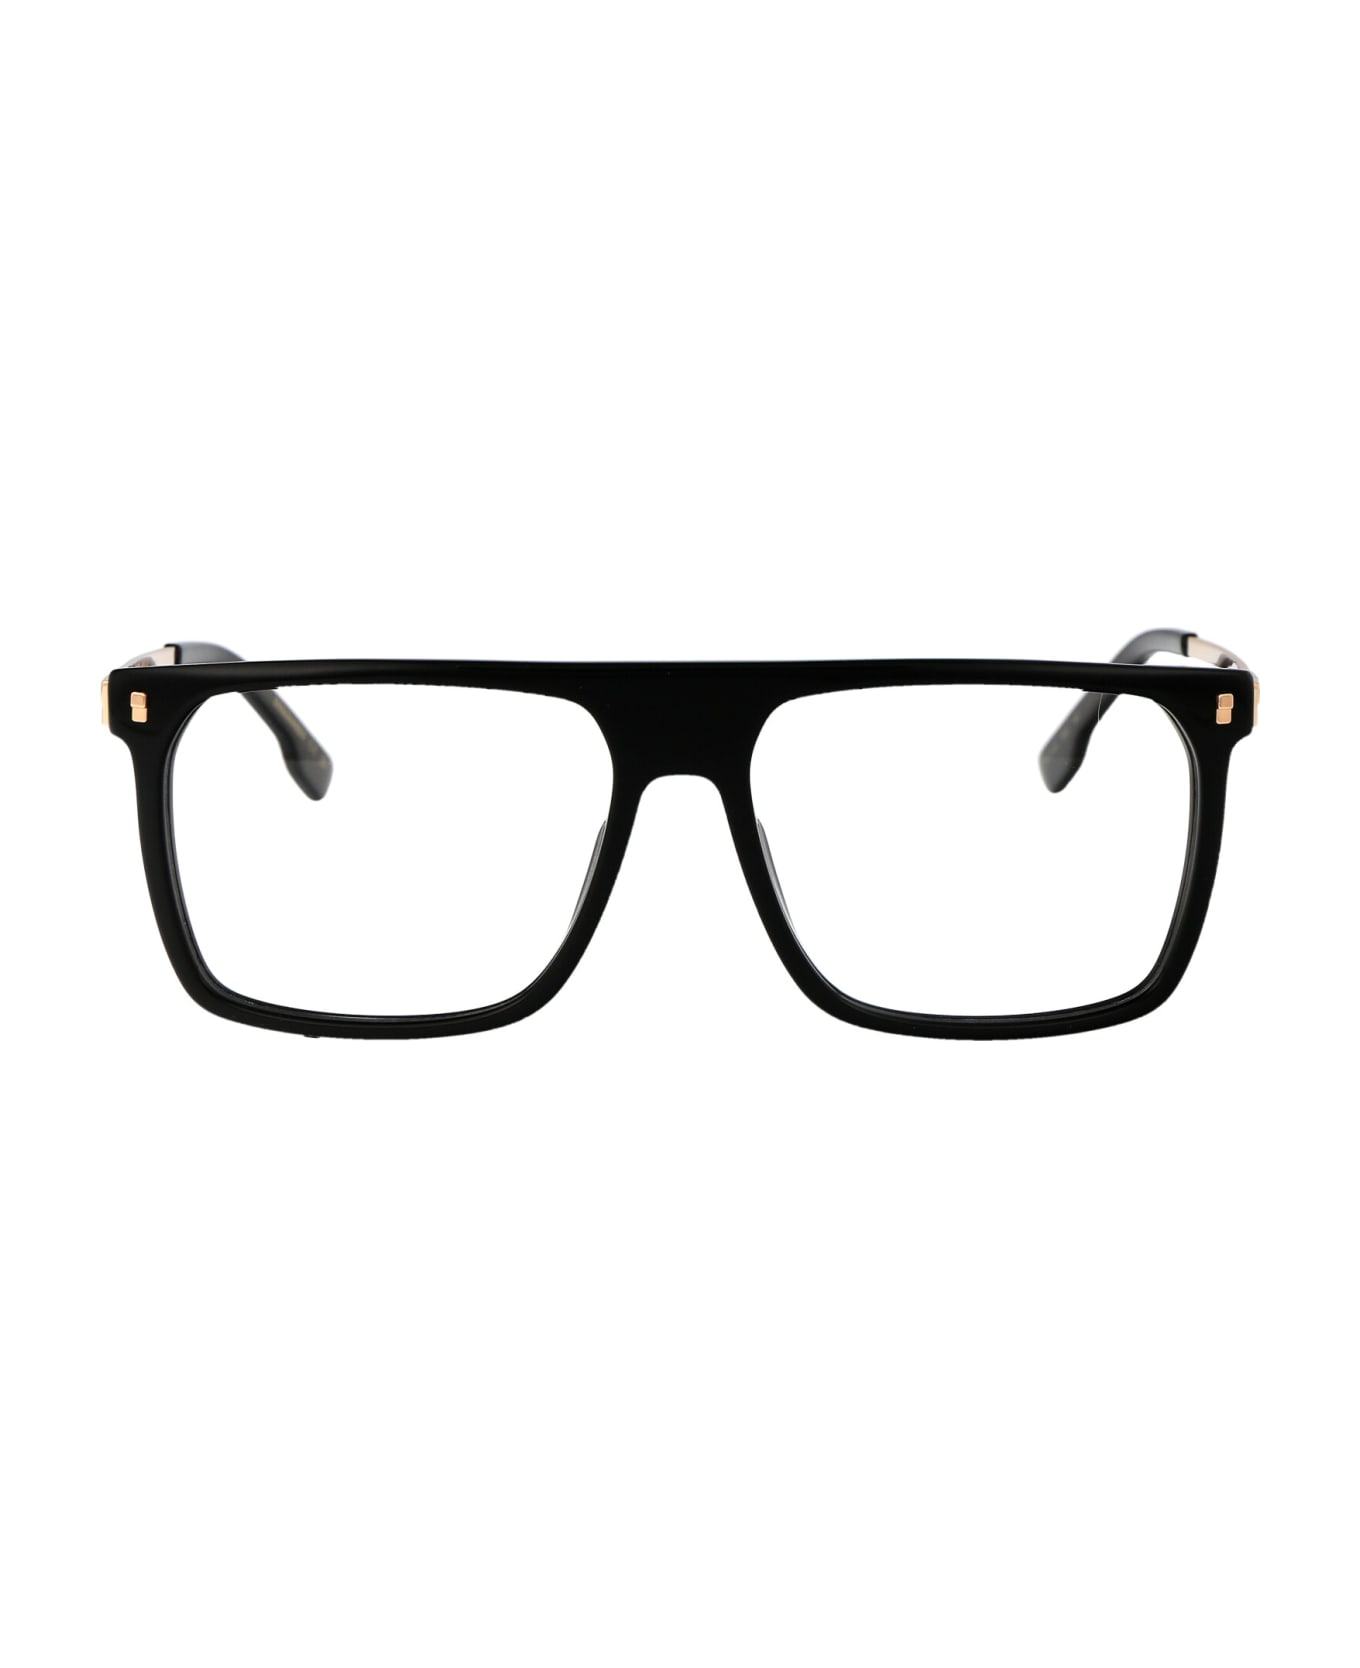 Dsquared2 Eyewear D2 0122 Glasses - 2United States of America